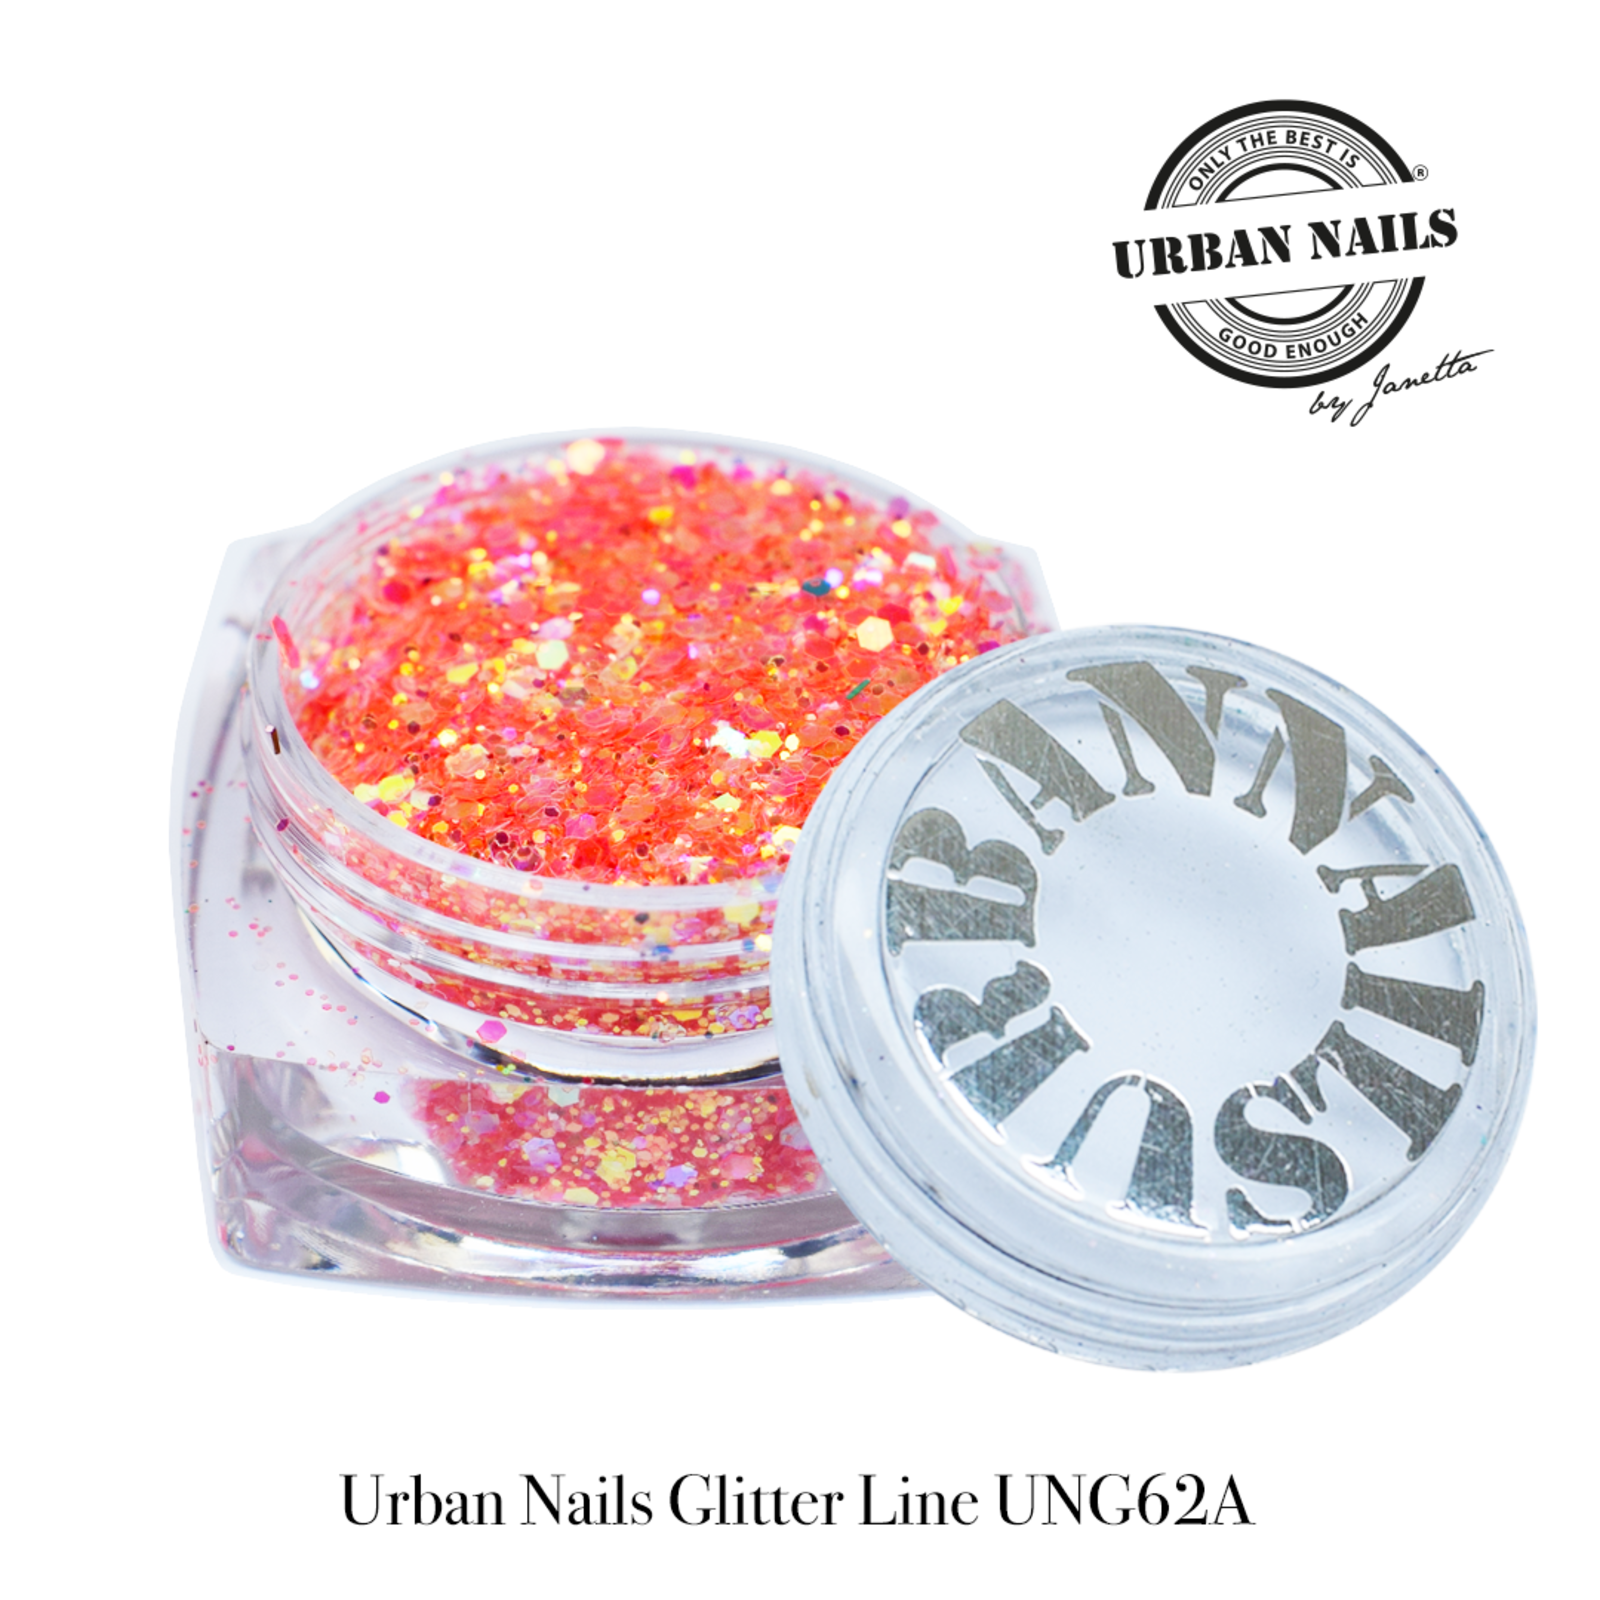 Urban nails Glitter Line UNG62-A